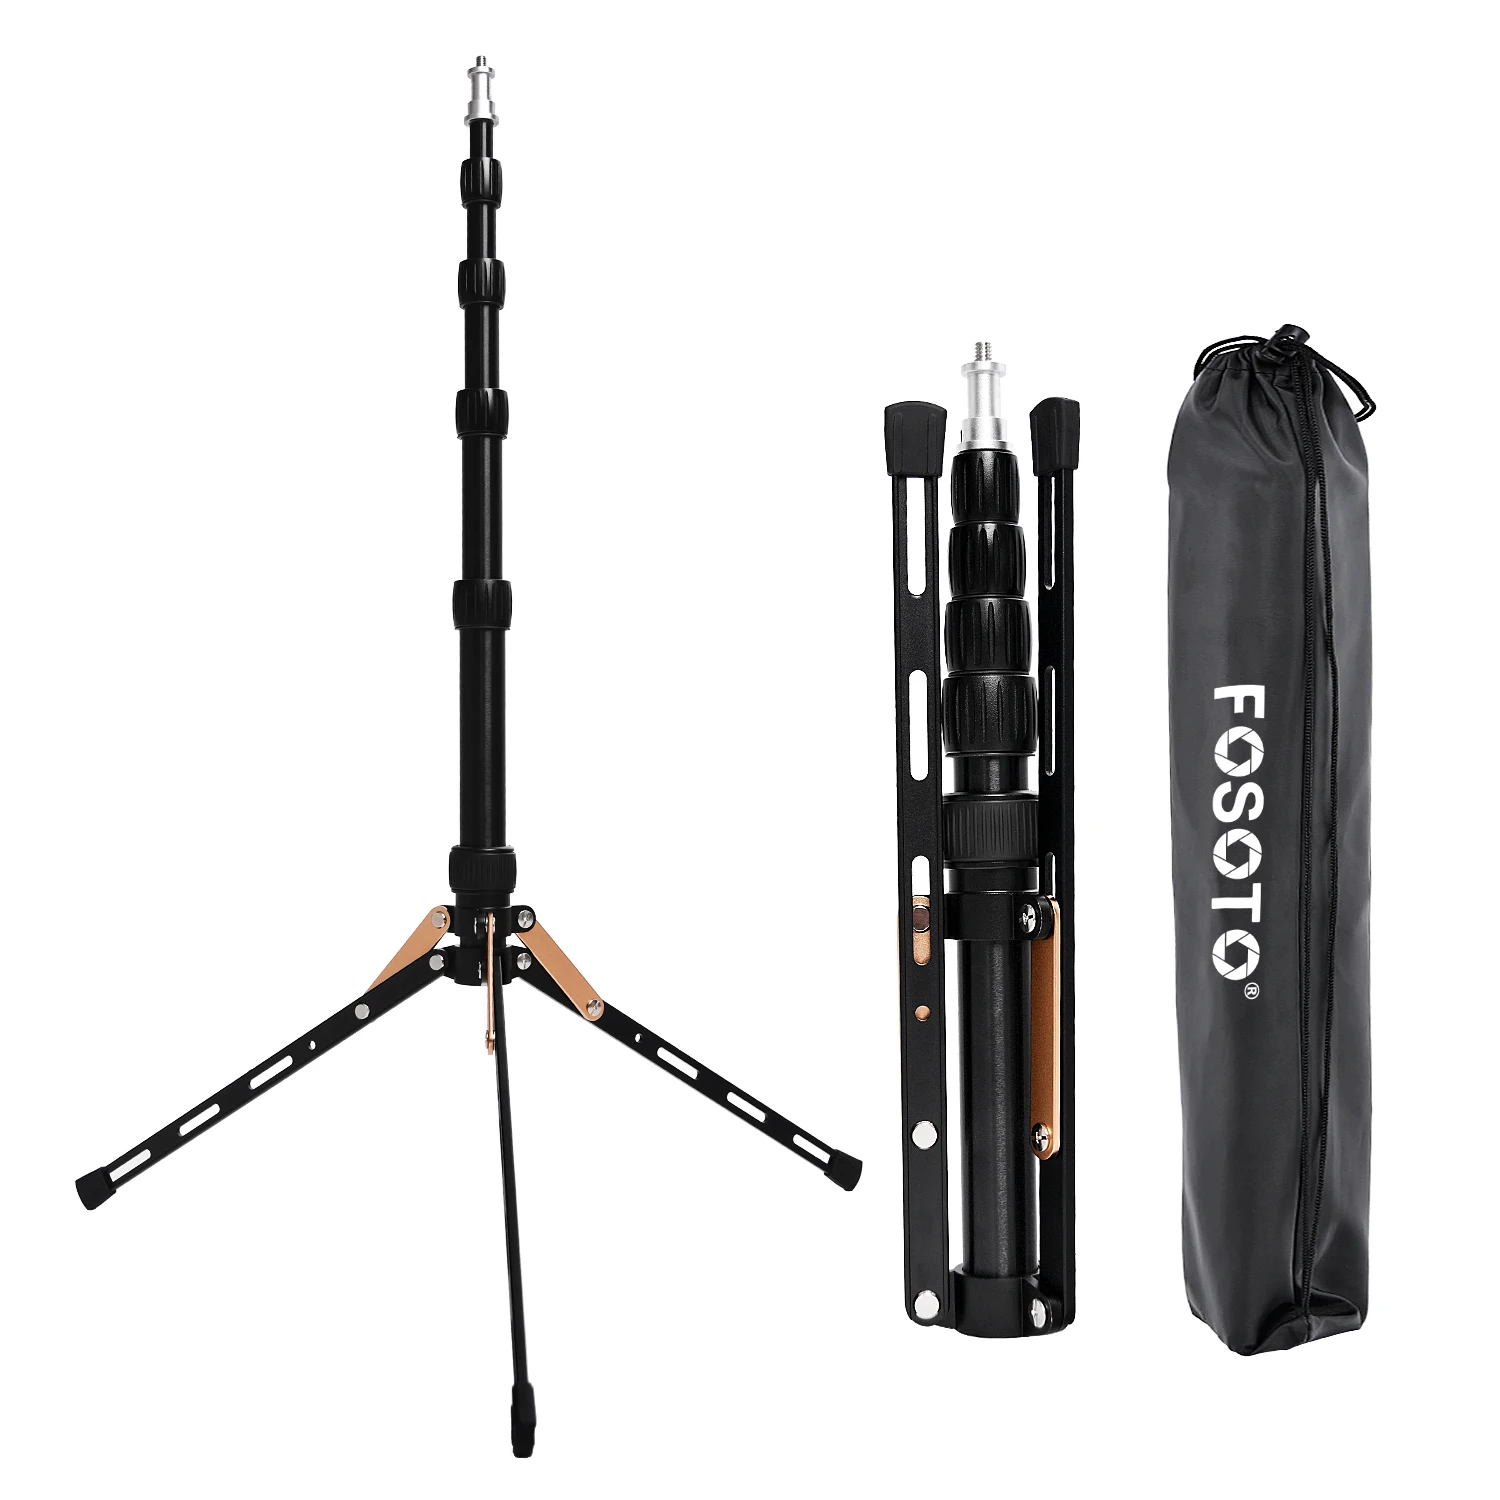 

FOSOTO FT-140 Led Light Stand Portable Tripod For Photographic Lighting Flash Umbrellas Reflector Photo Studio Camera Phone